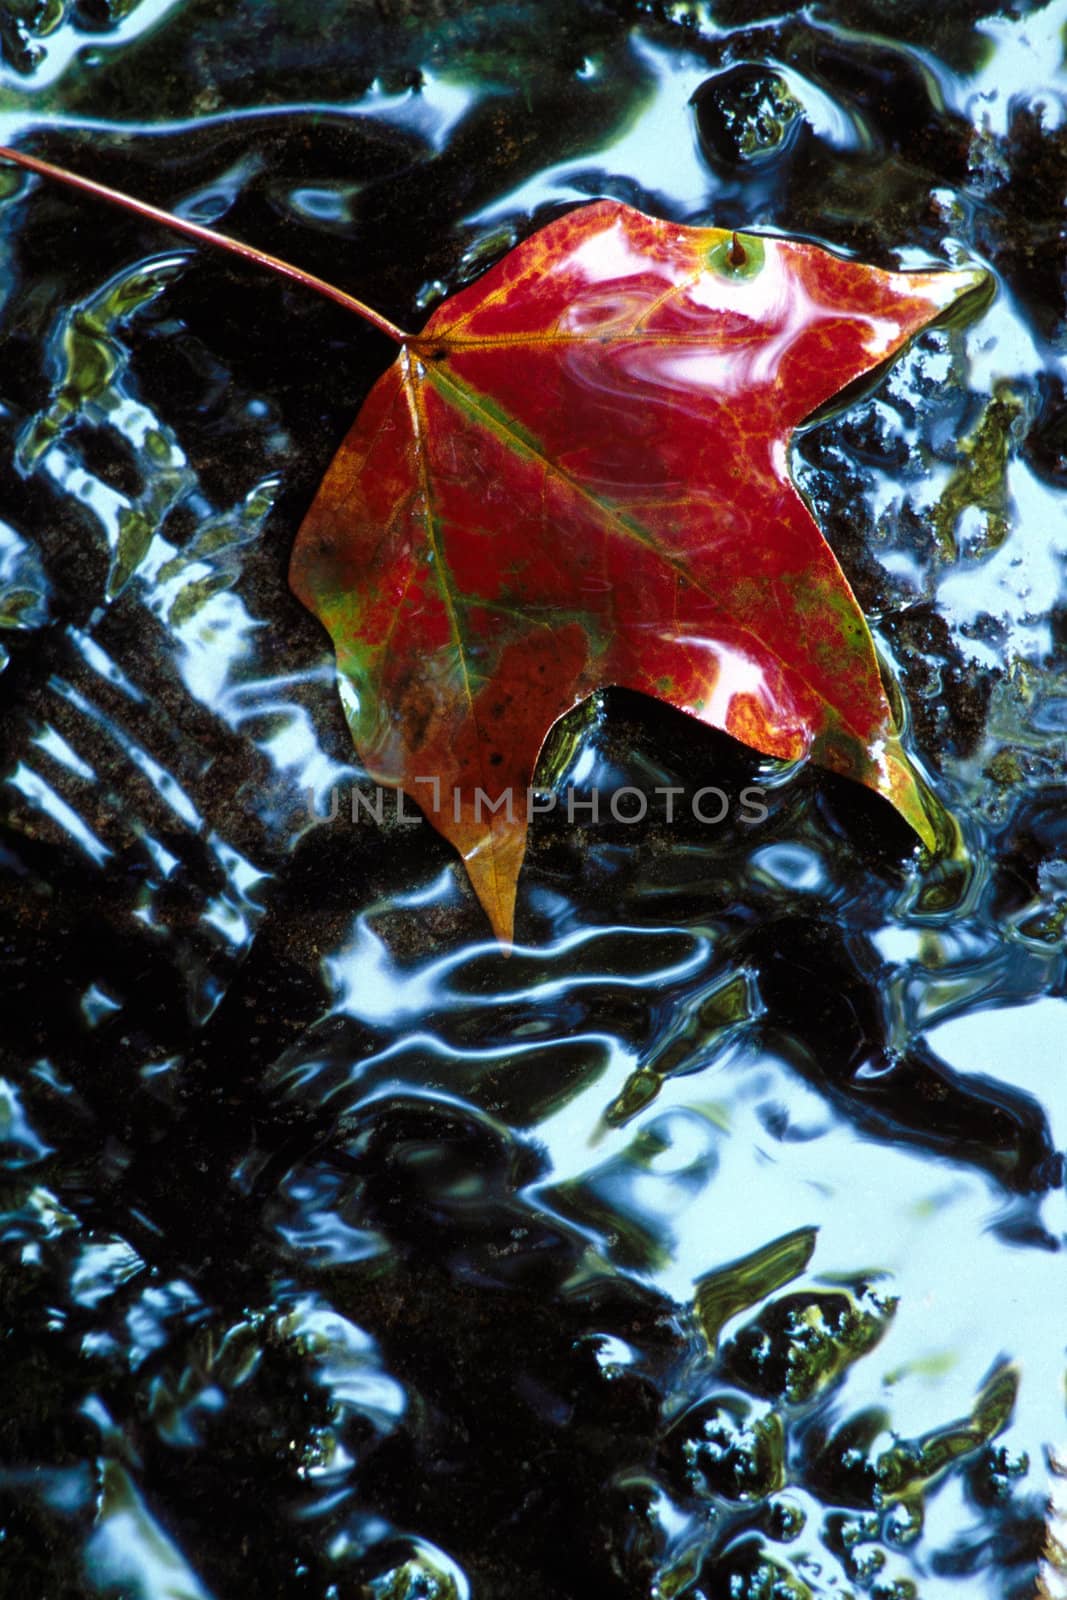 A Sweetgum leaf on a shiny, wet rock